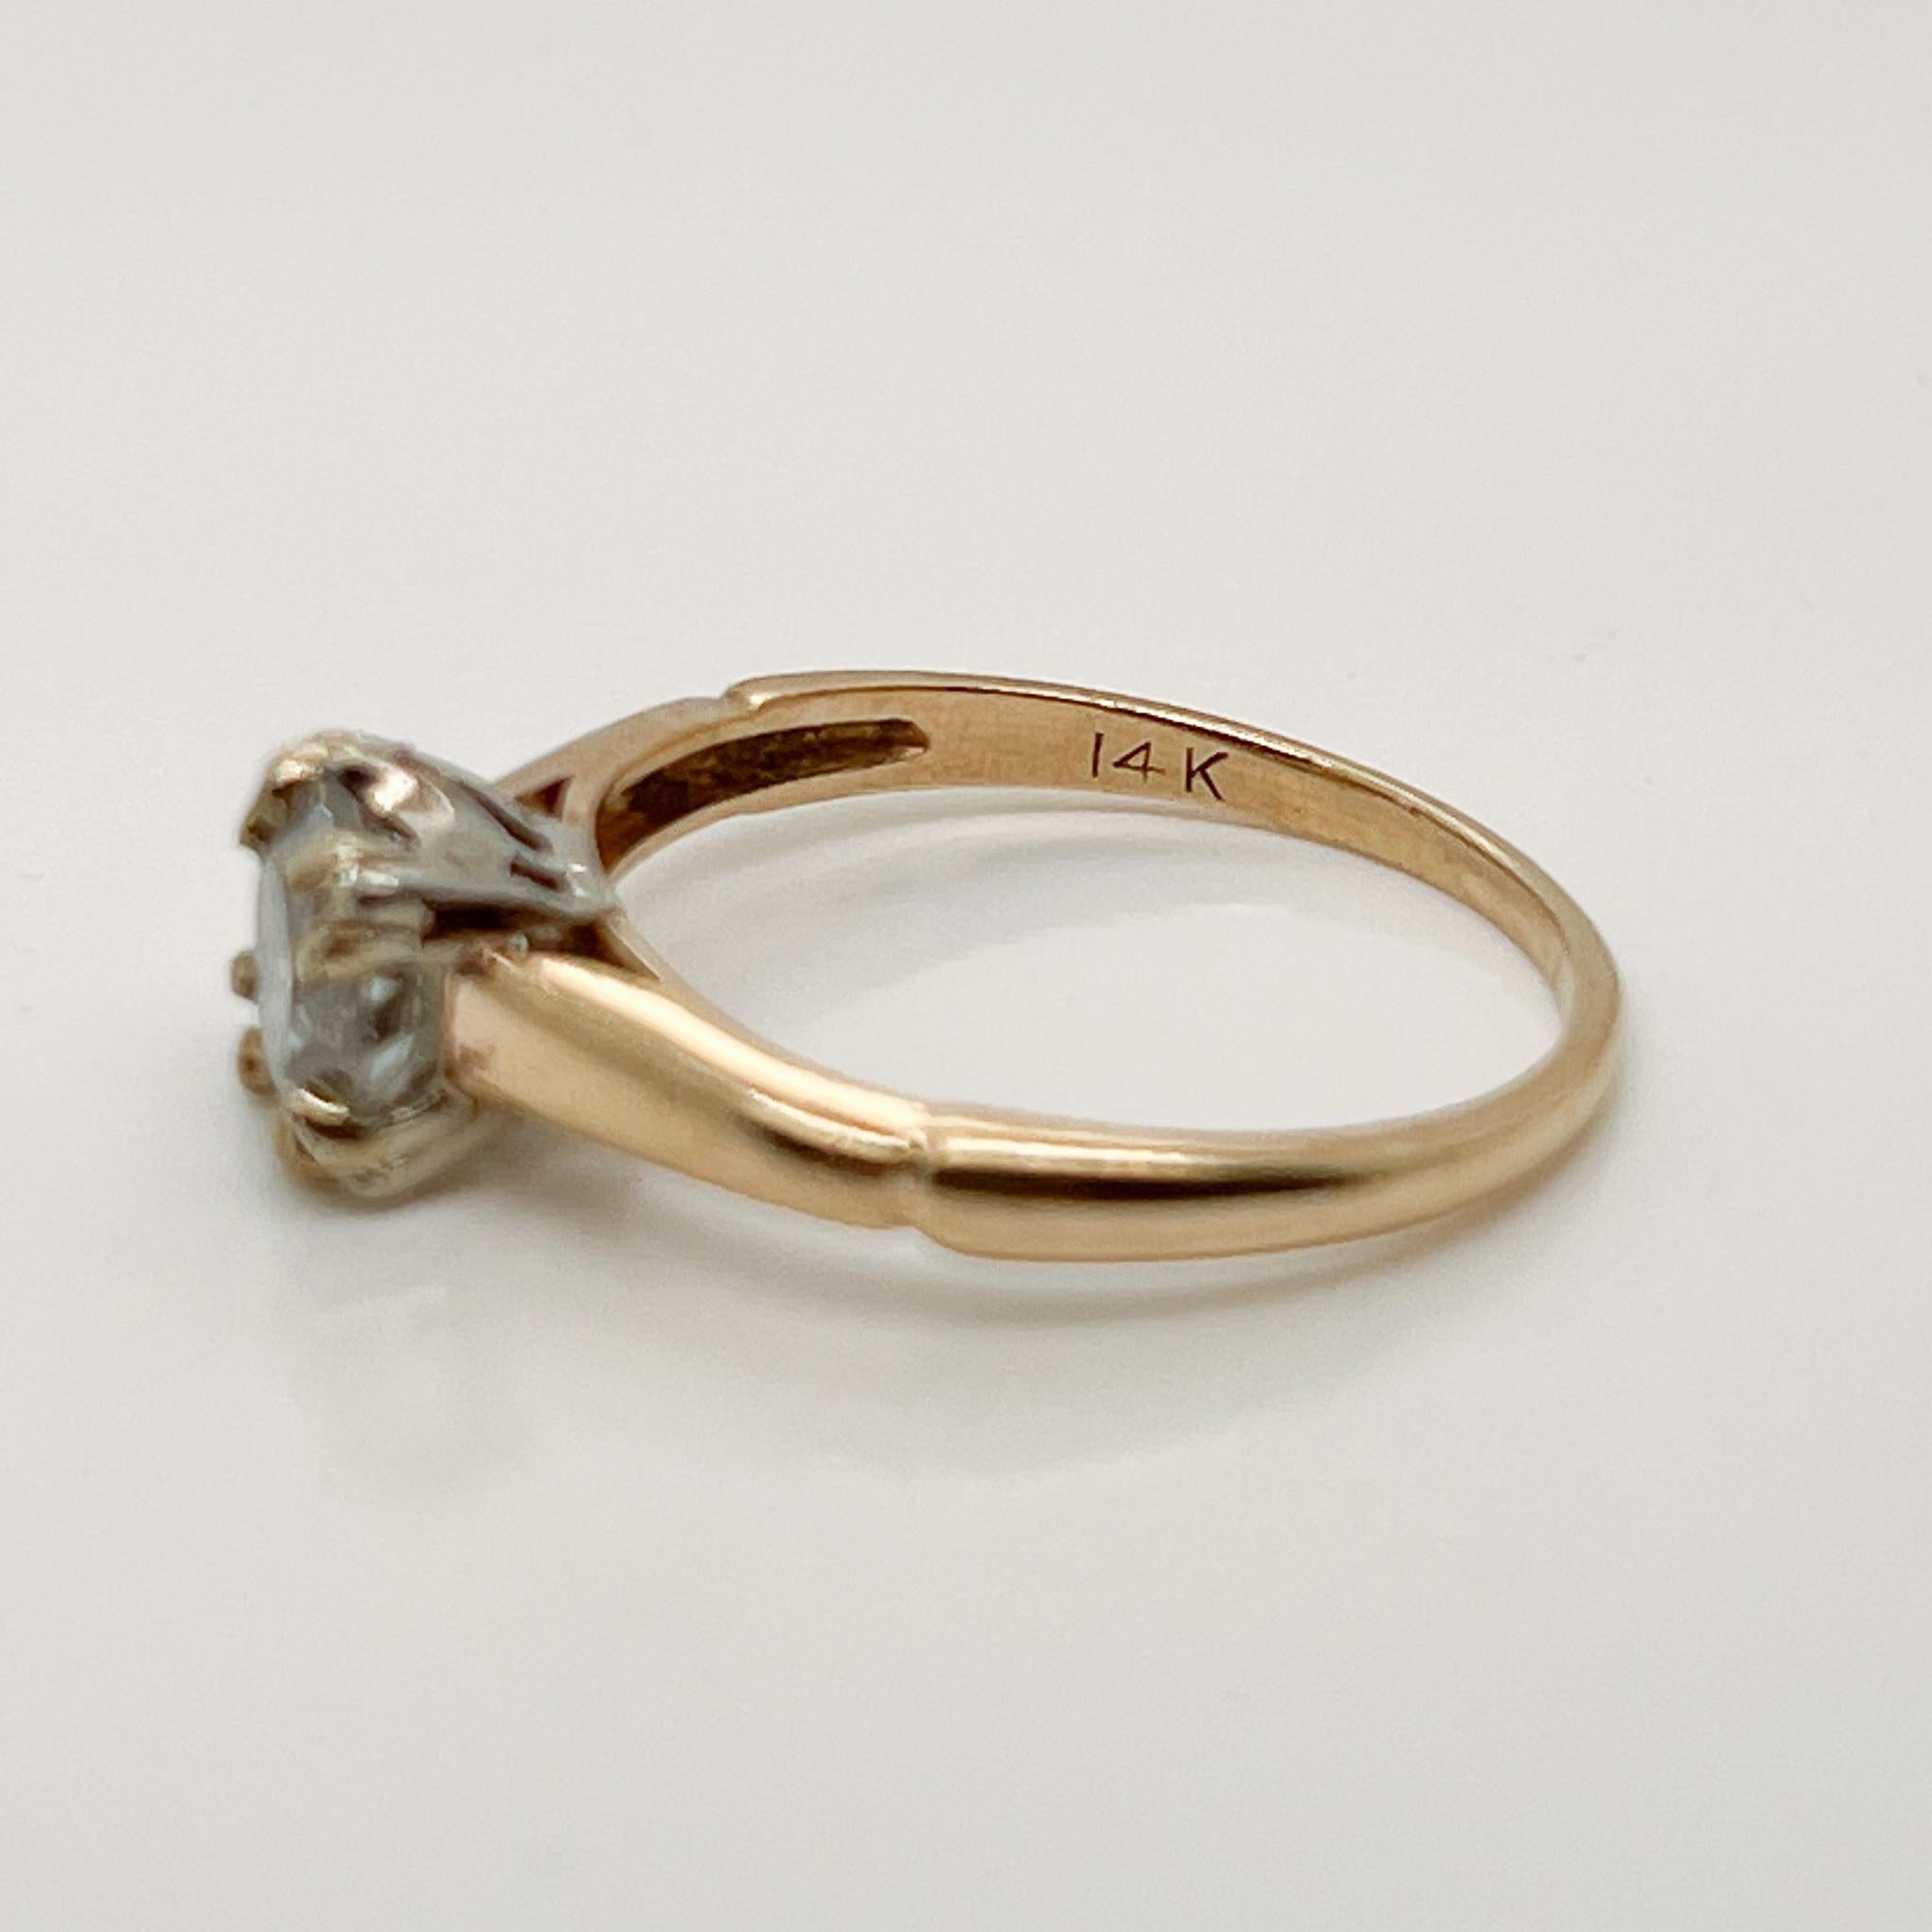 Antique 14 Karat Gold & 0.73 Ct. European Cut Diamond Solitaire Ring For Sale 6